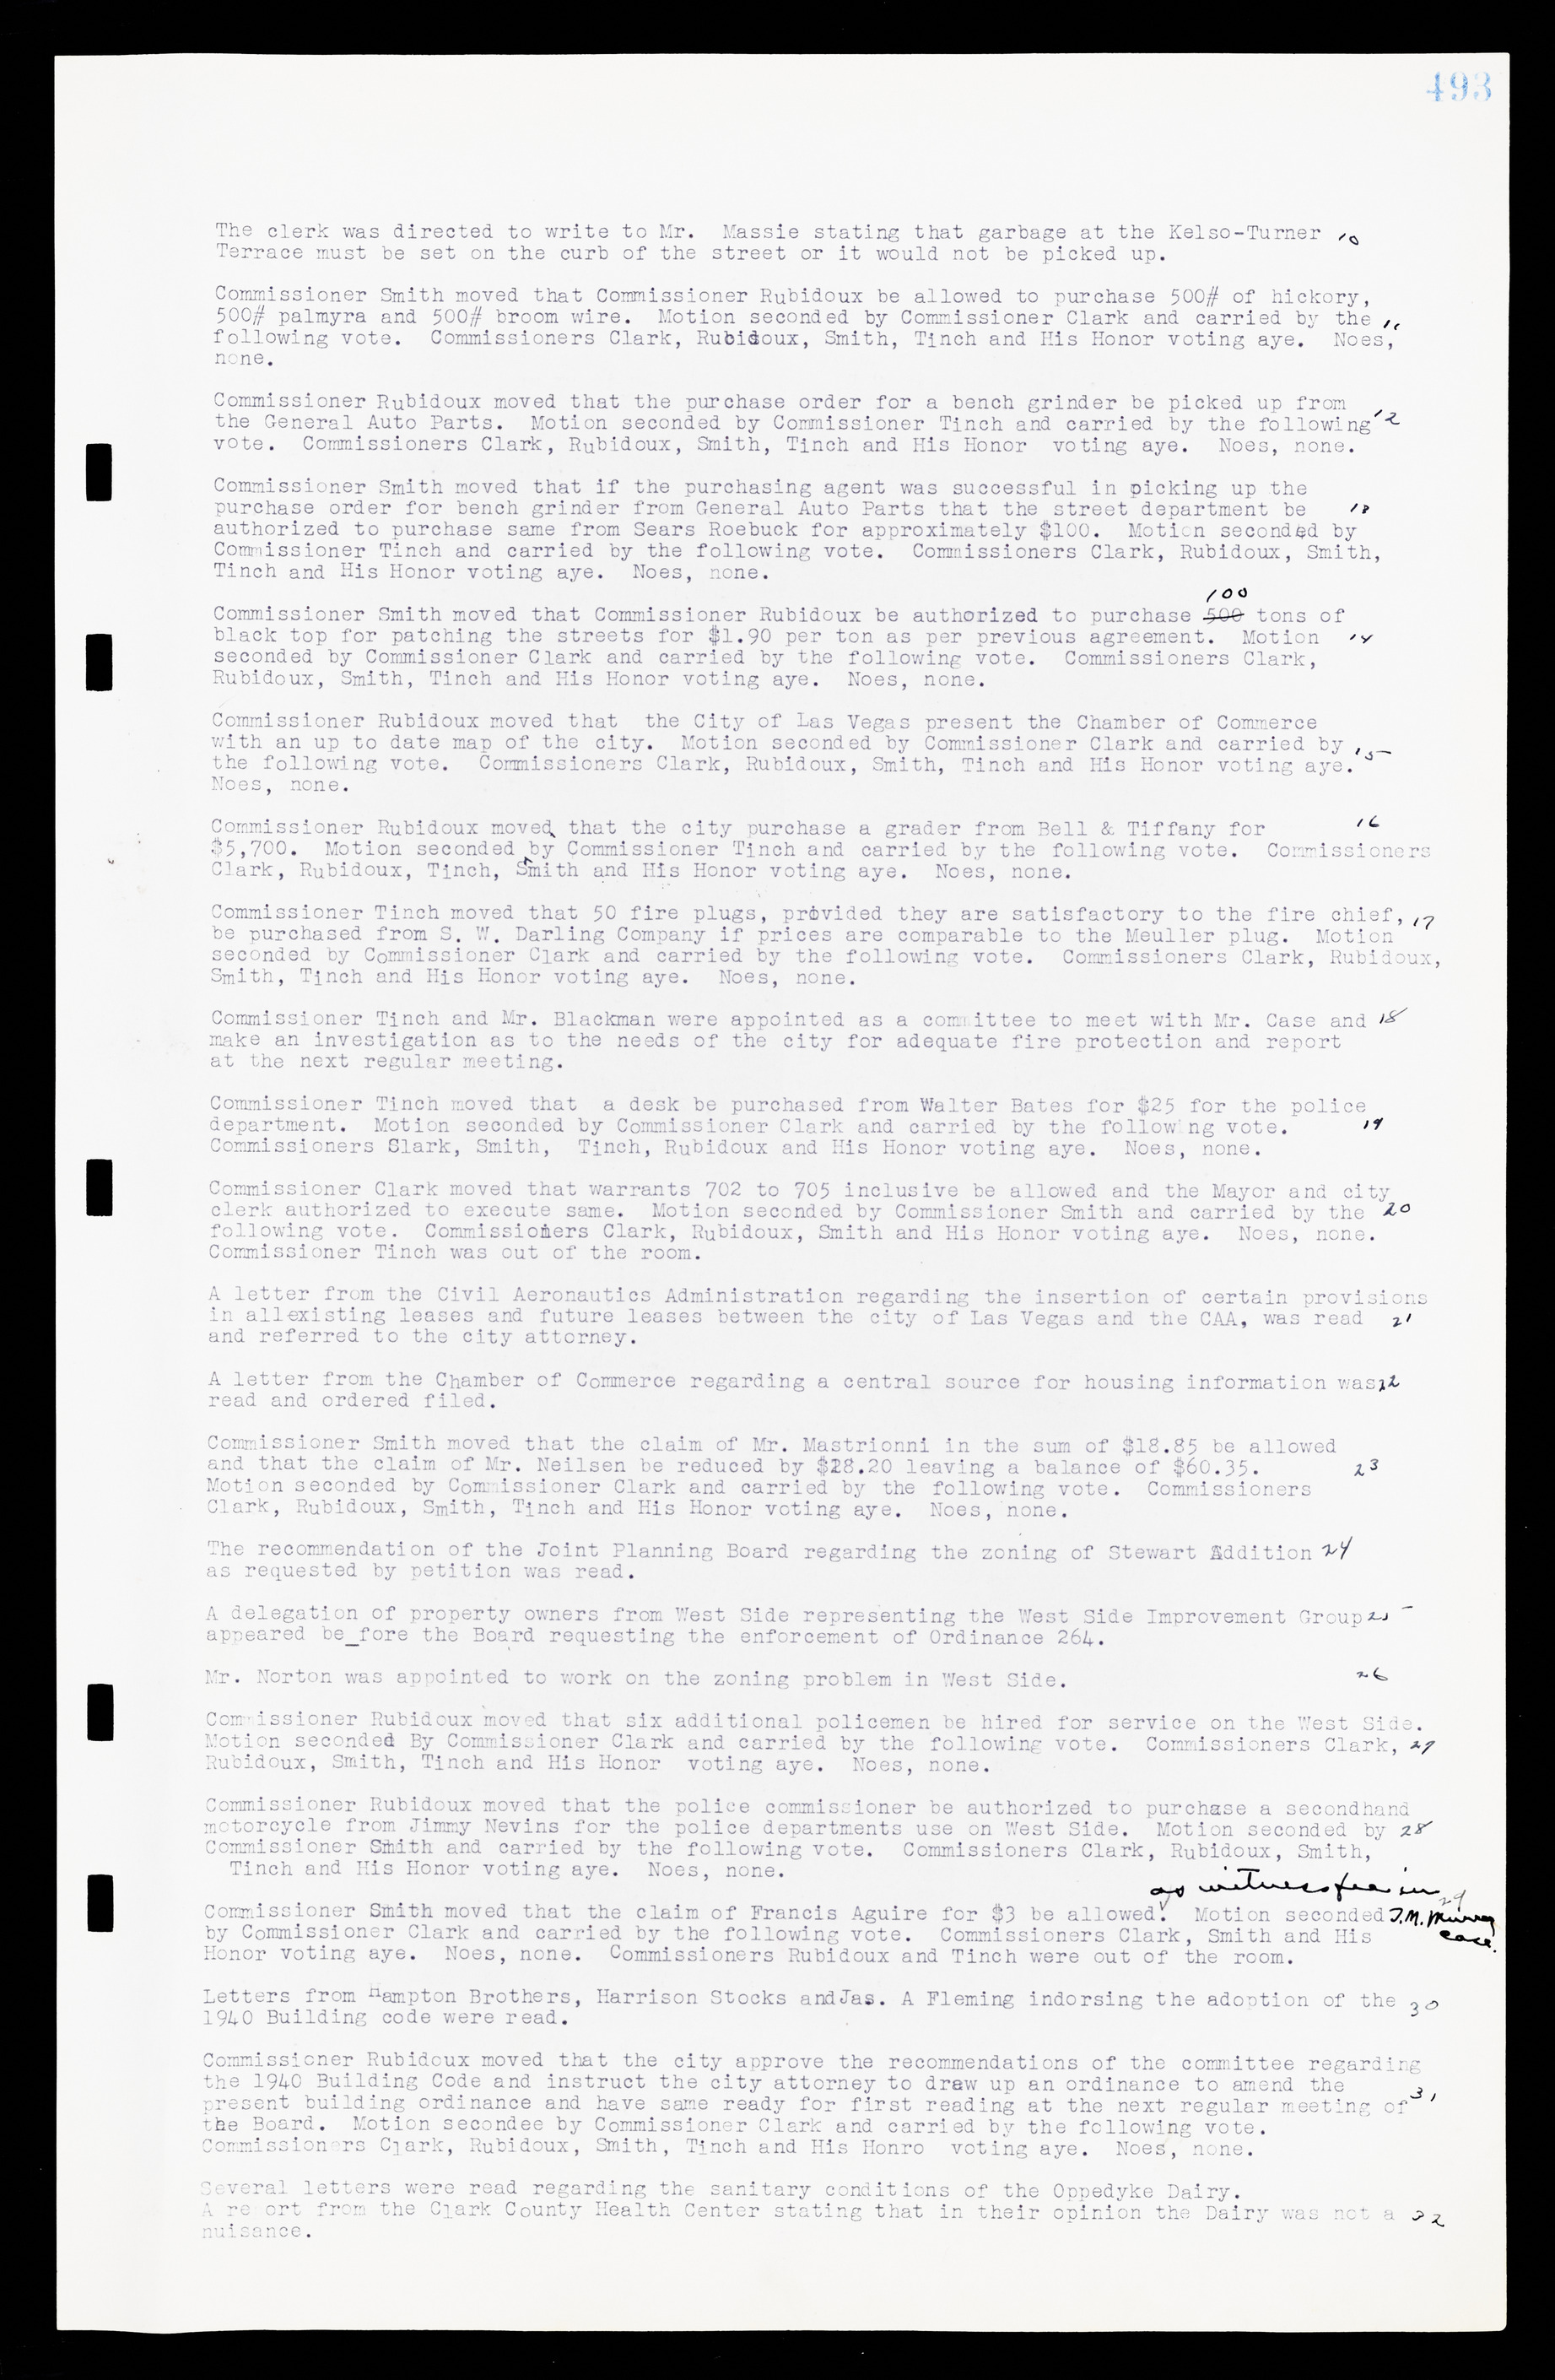 Las Vegas City Commission Minutes, February 17, 1937 to August 4, 1942, lvc000004-521